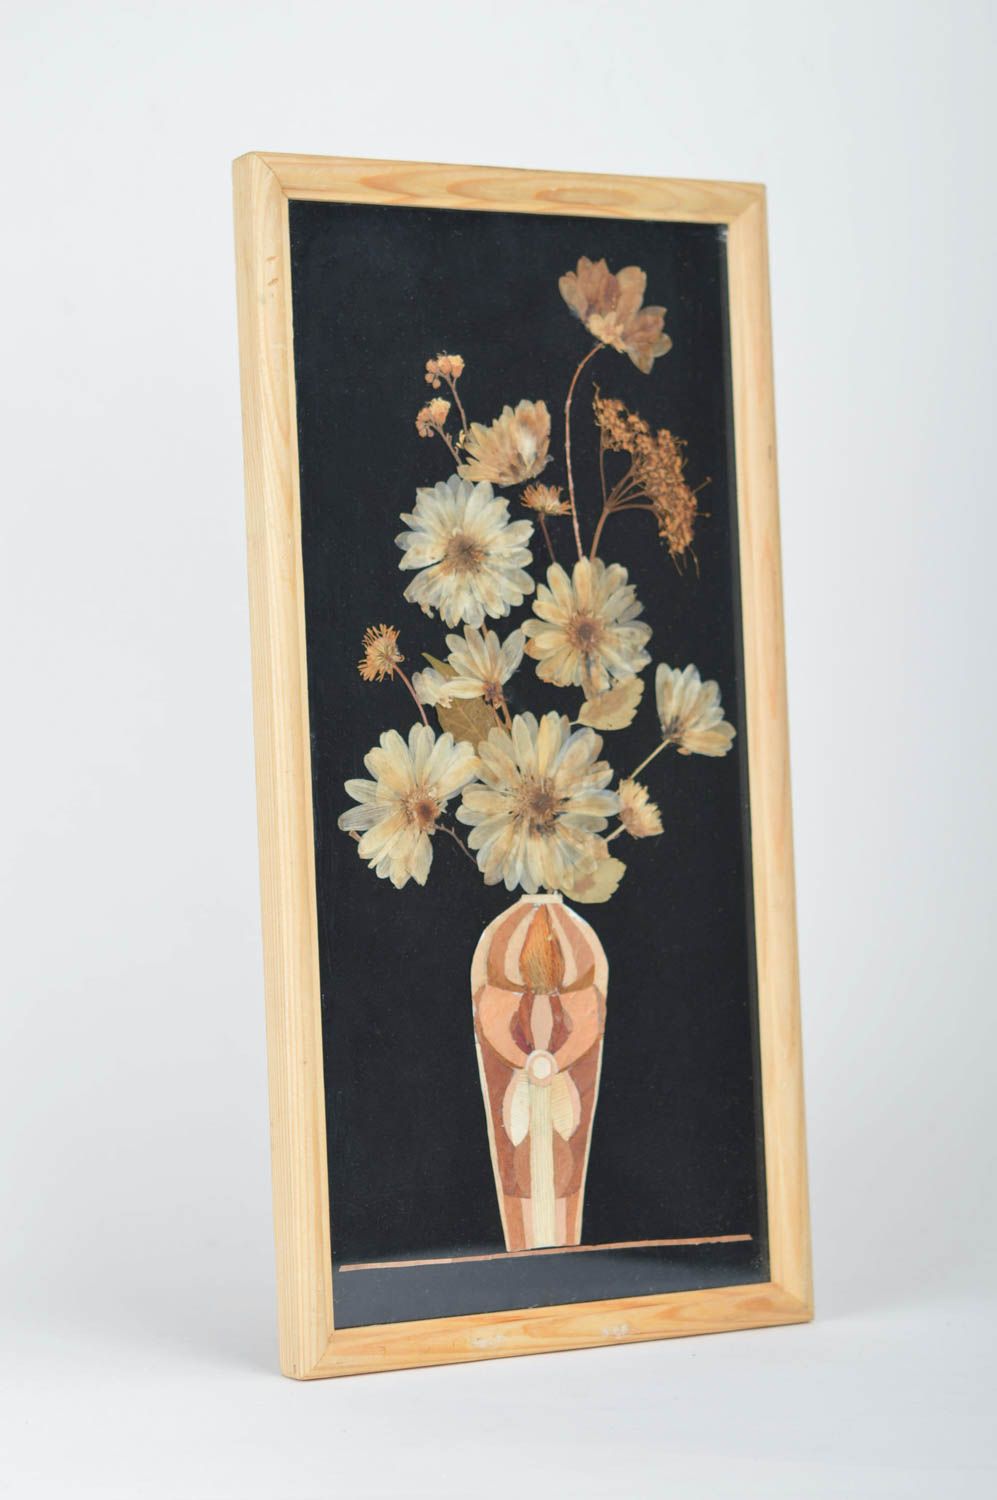 Handmade designer wall picture pressed flower art oshibana painting in frame photo 3